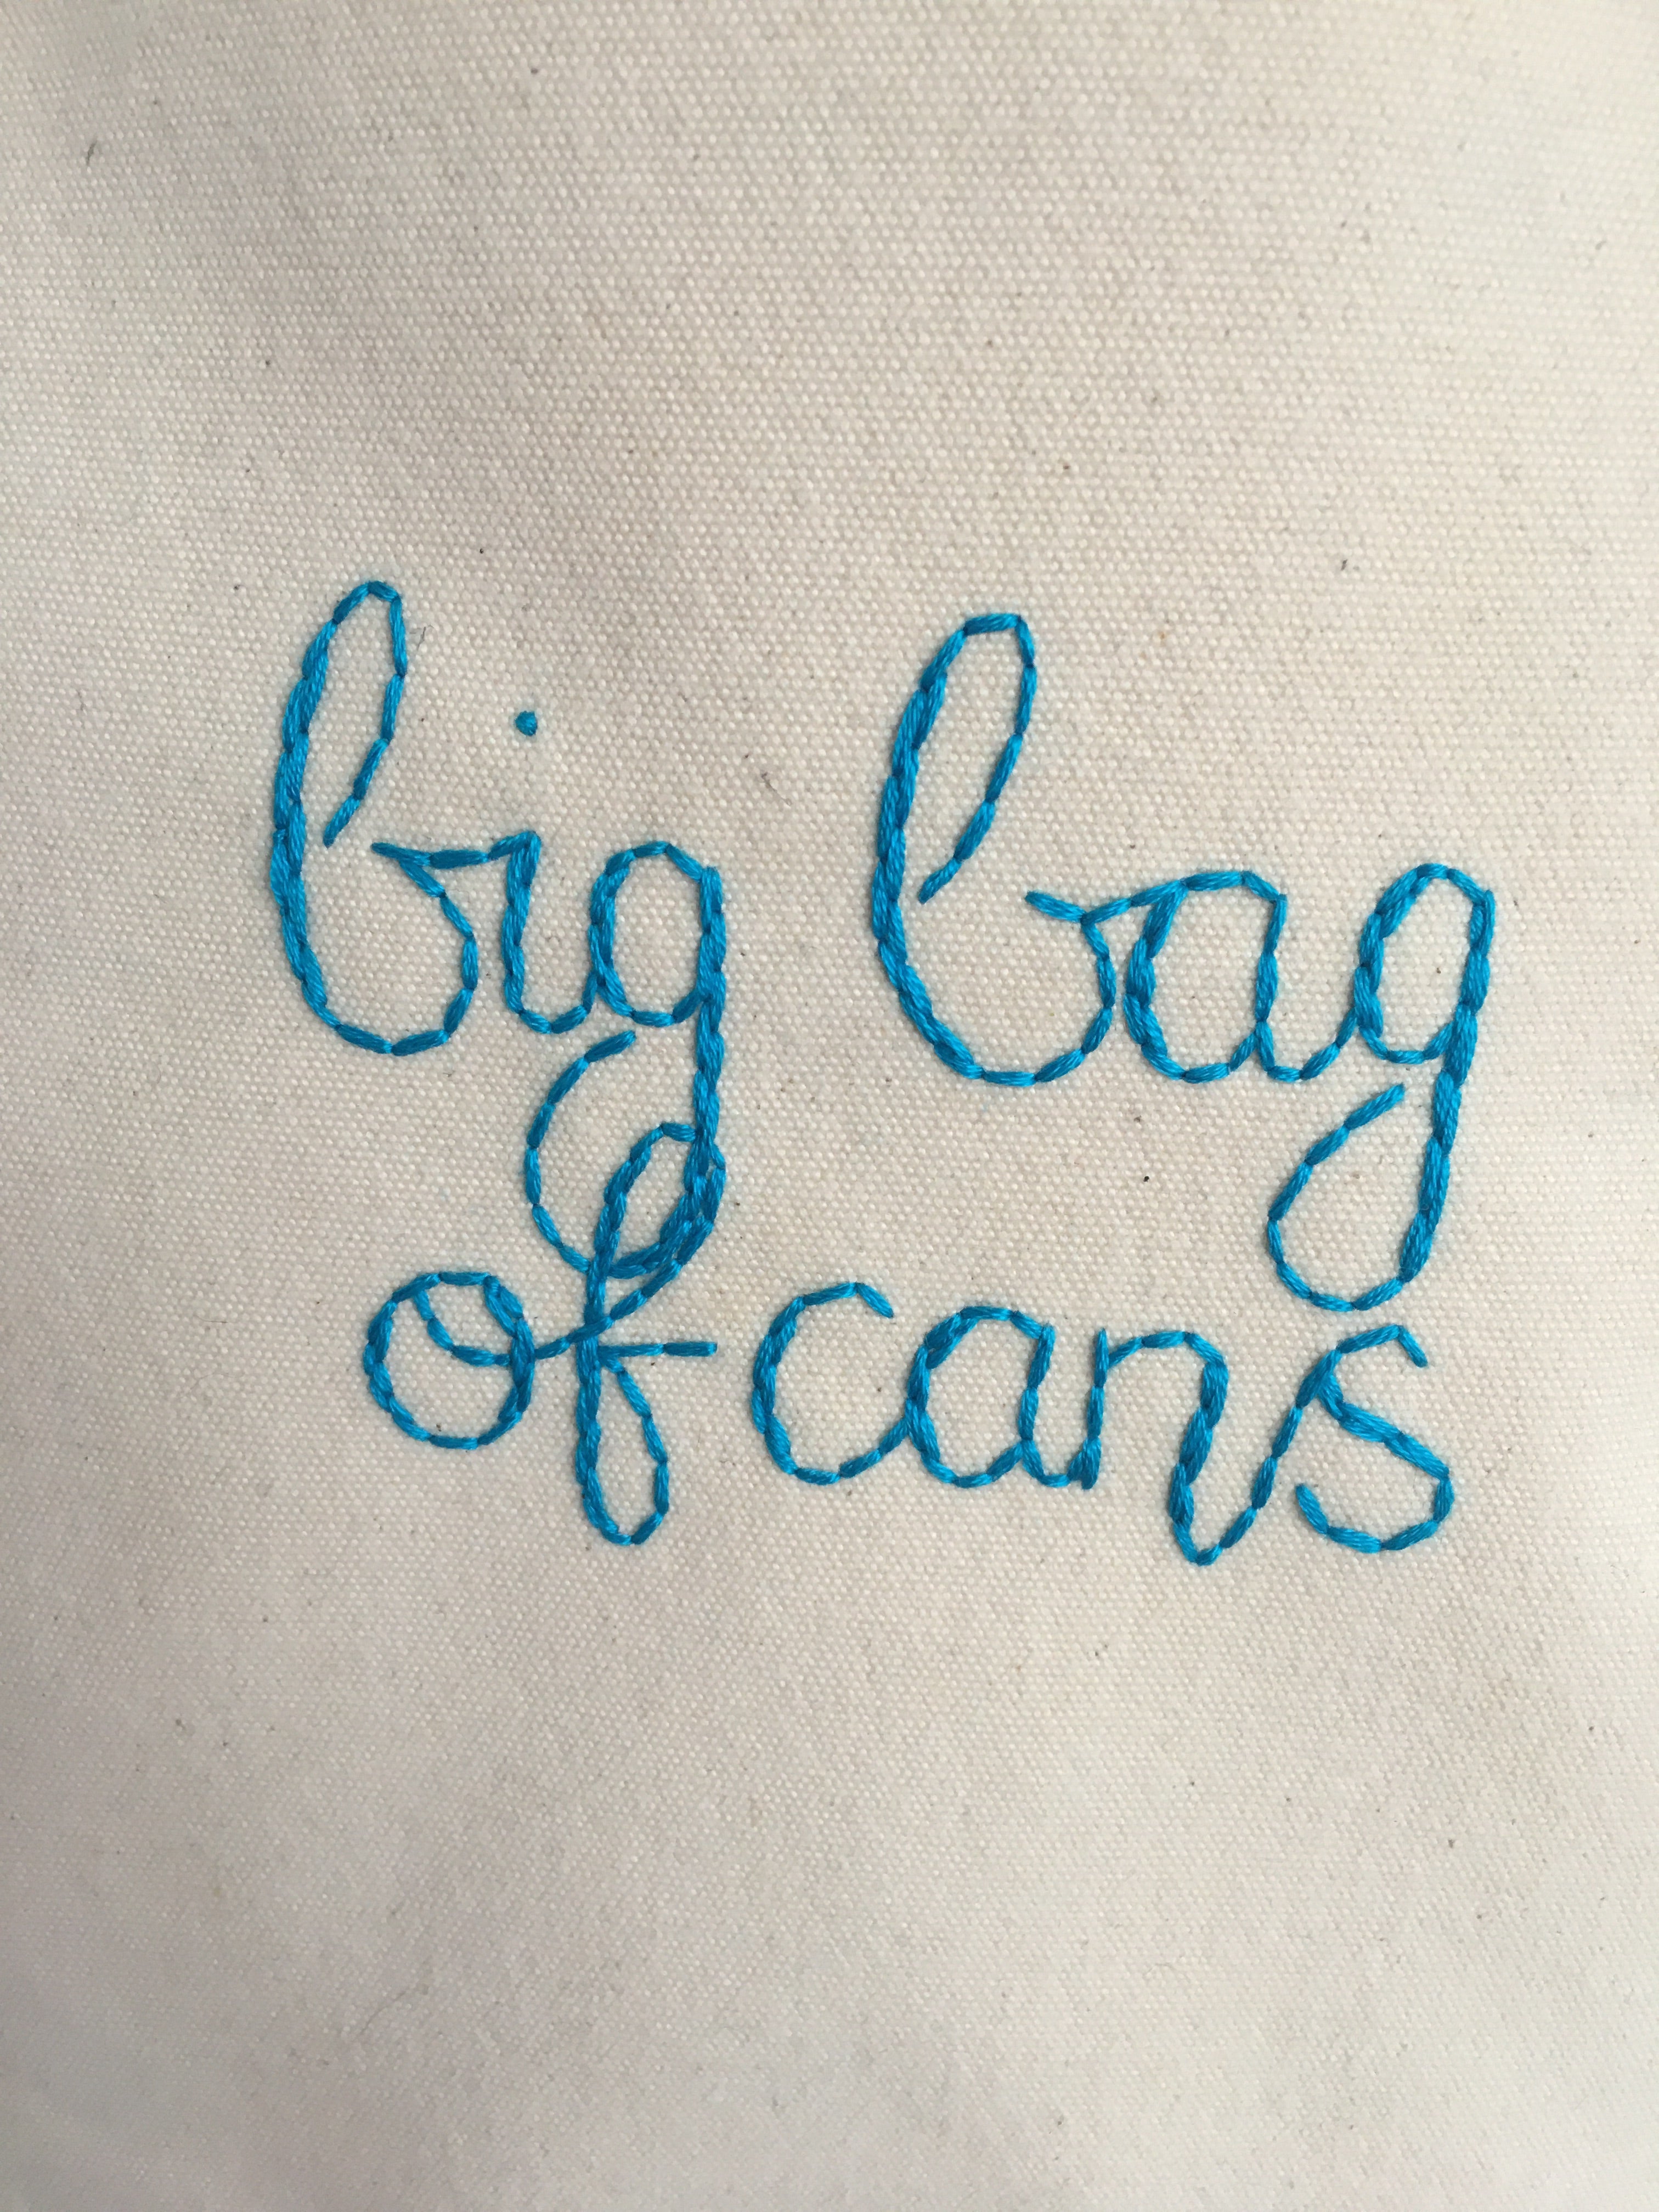 BIG BAG OF CANS - TOTE BAG